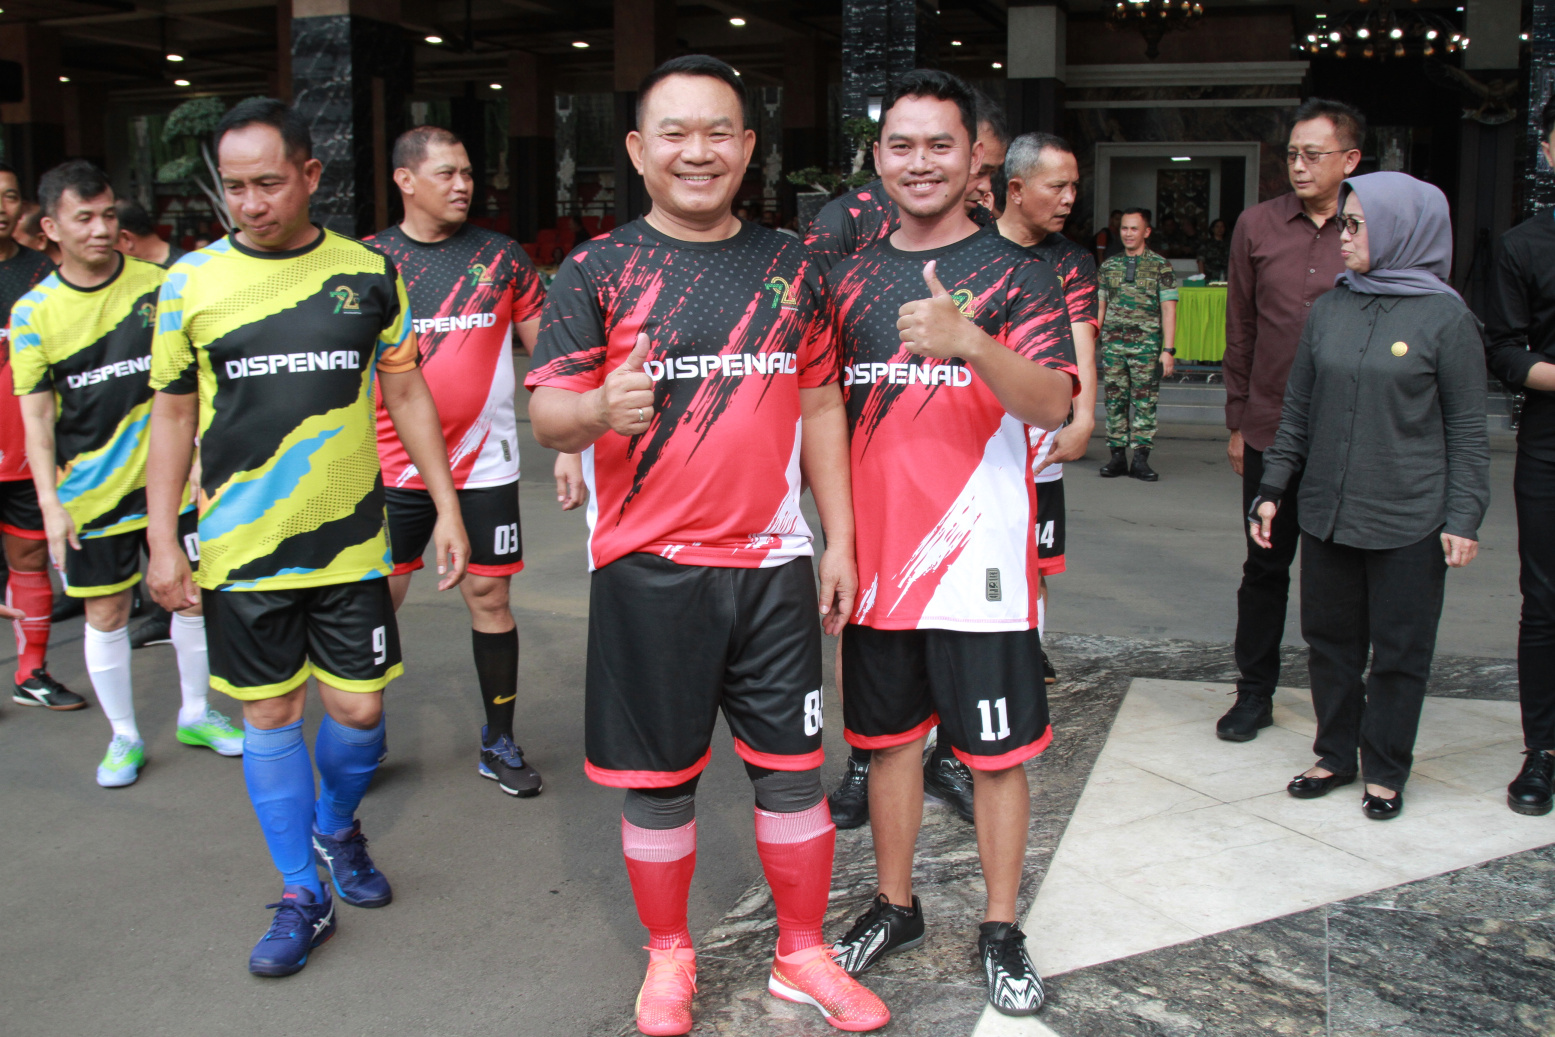 KASAD Jenderal TNI Dr Dudung menggelar fun soccer game KASAD bersama para pimpinan media nasional (Ashar/SinPo.id)nPo.id)